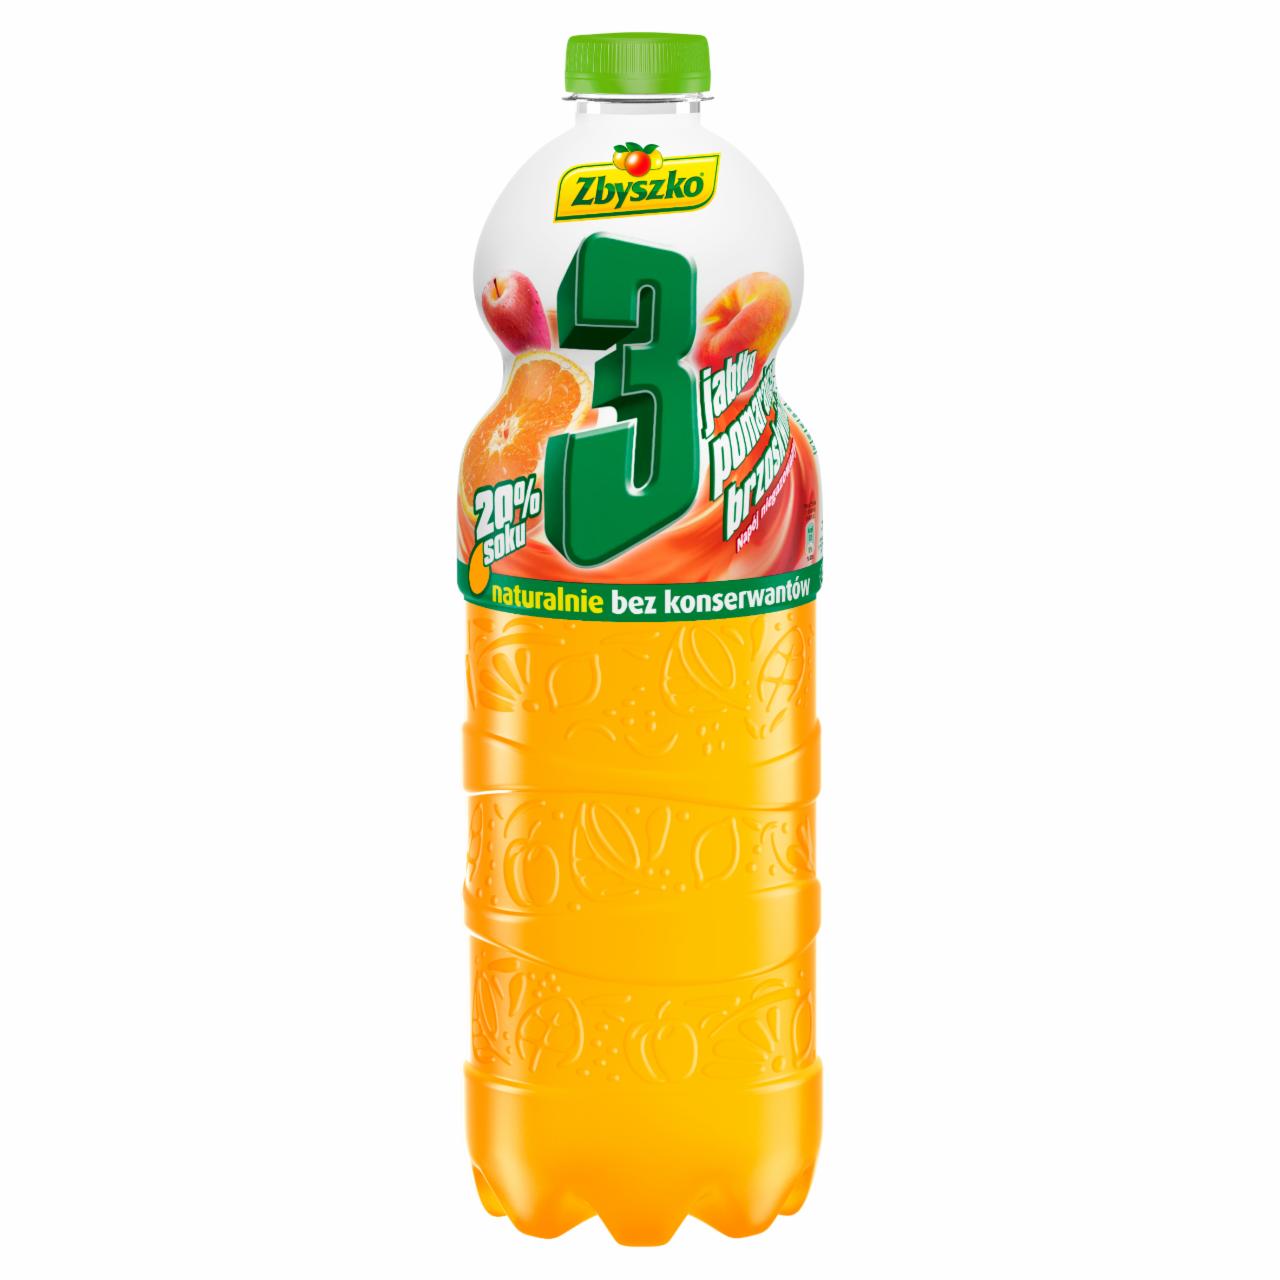 Photo - Zbyszko 3 Apple Orange Peach Drink 2 L